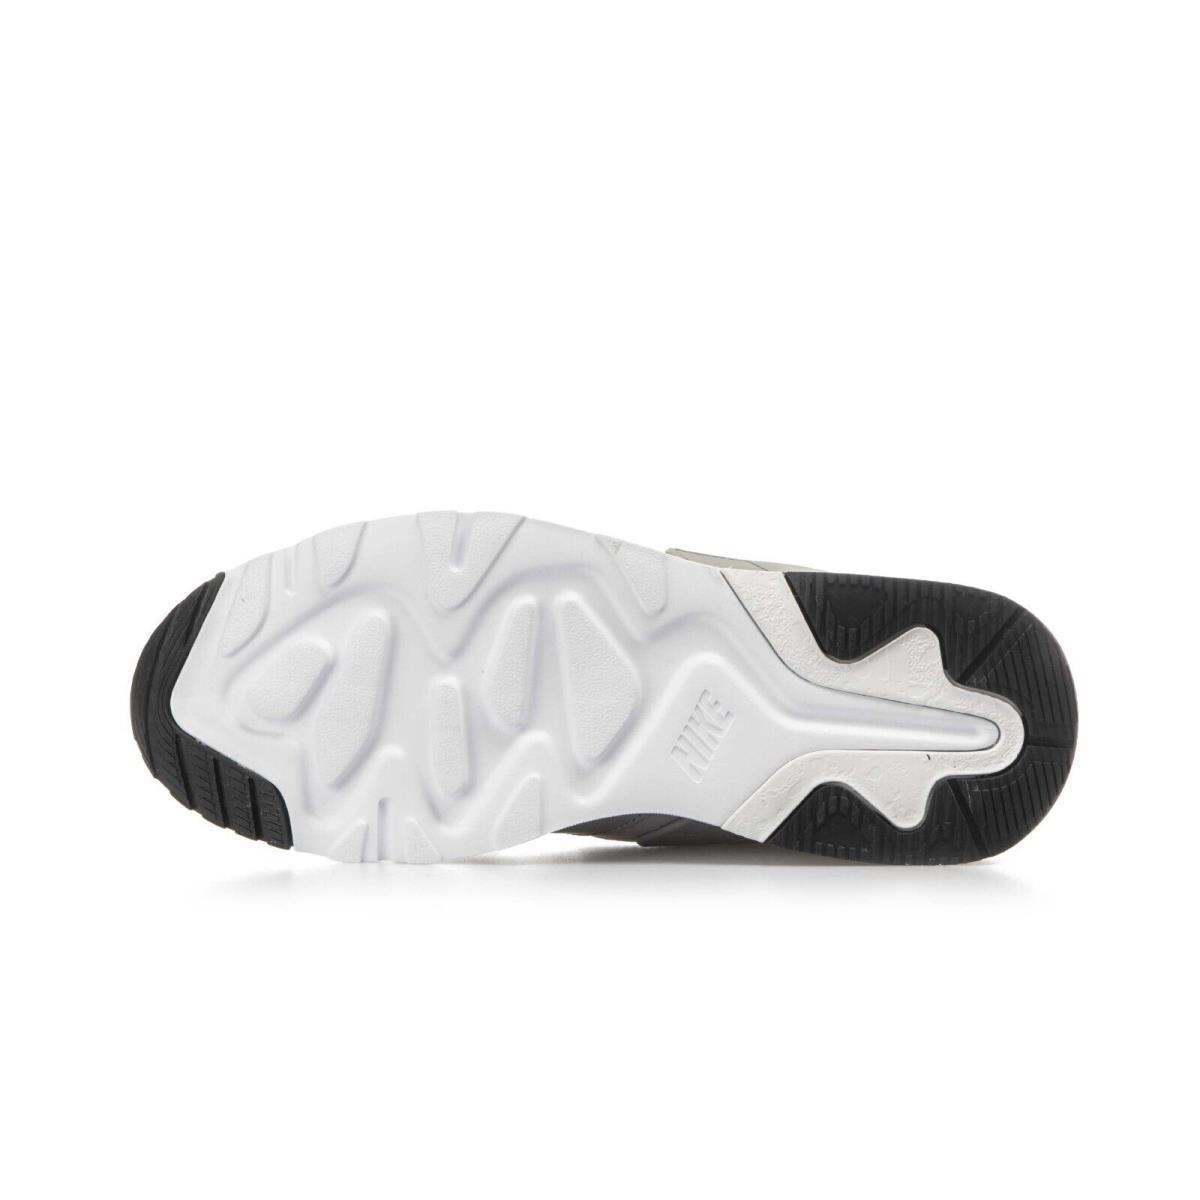 Nike shoes Daybreak - Grey 2